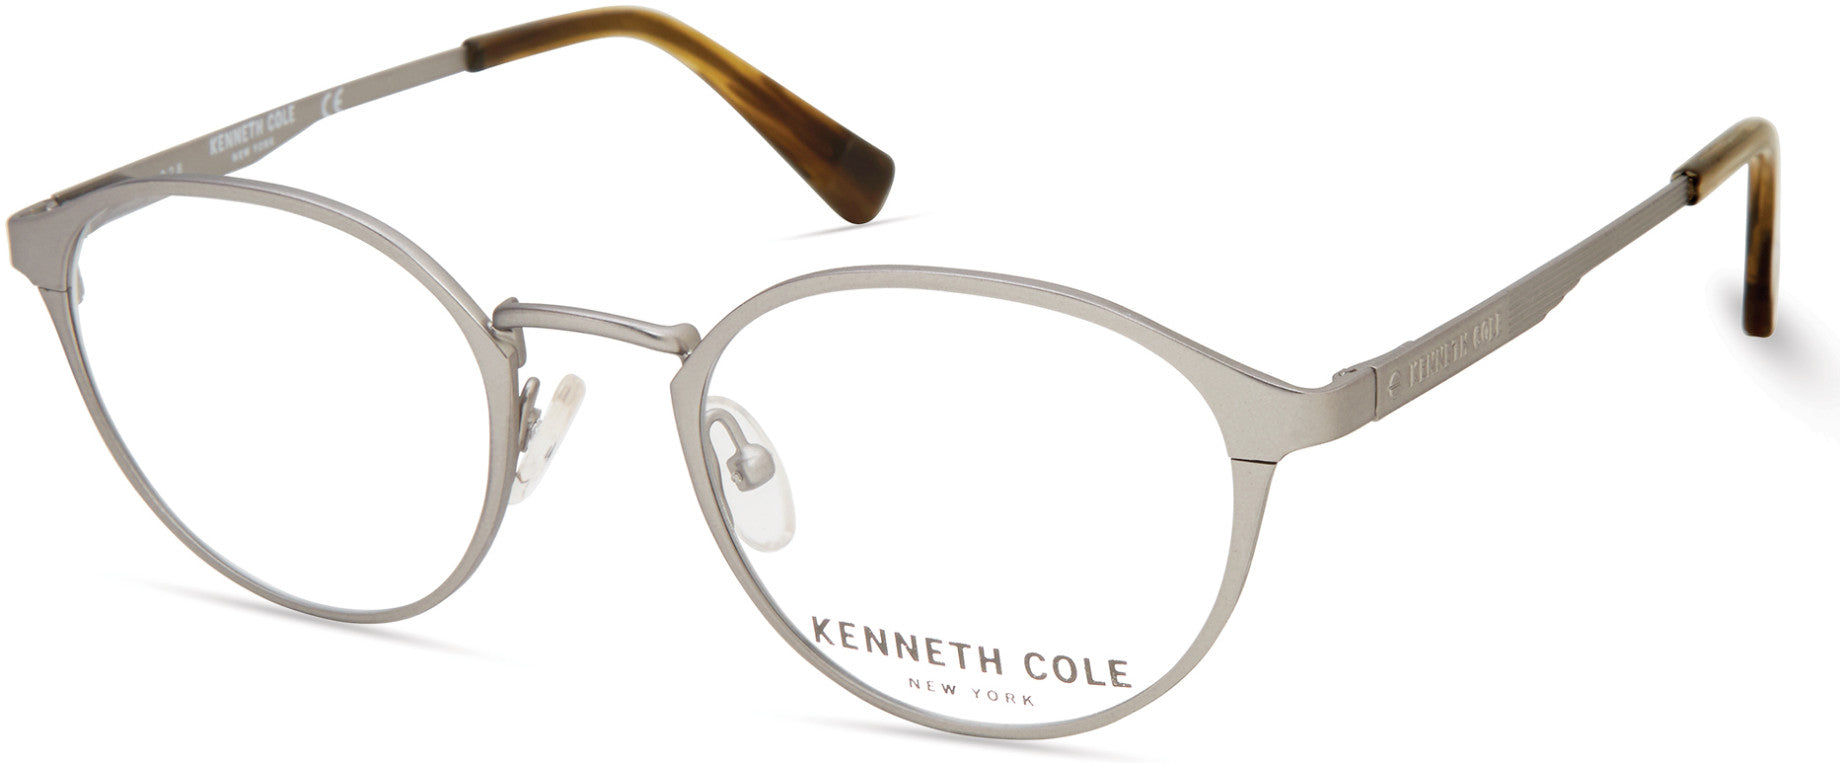 Kenneth Cole New York,Kenneth Cole Reaction KC0294 Round Eyeglasses 011-011 - Matte Light Nickeltin